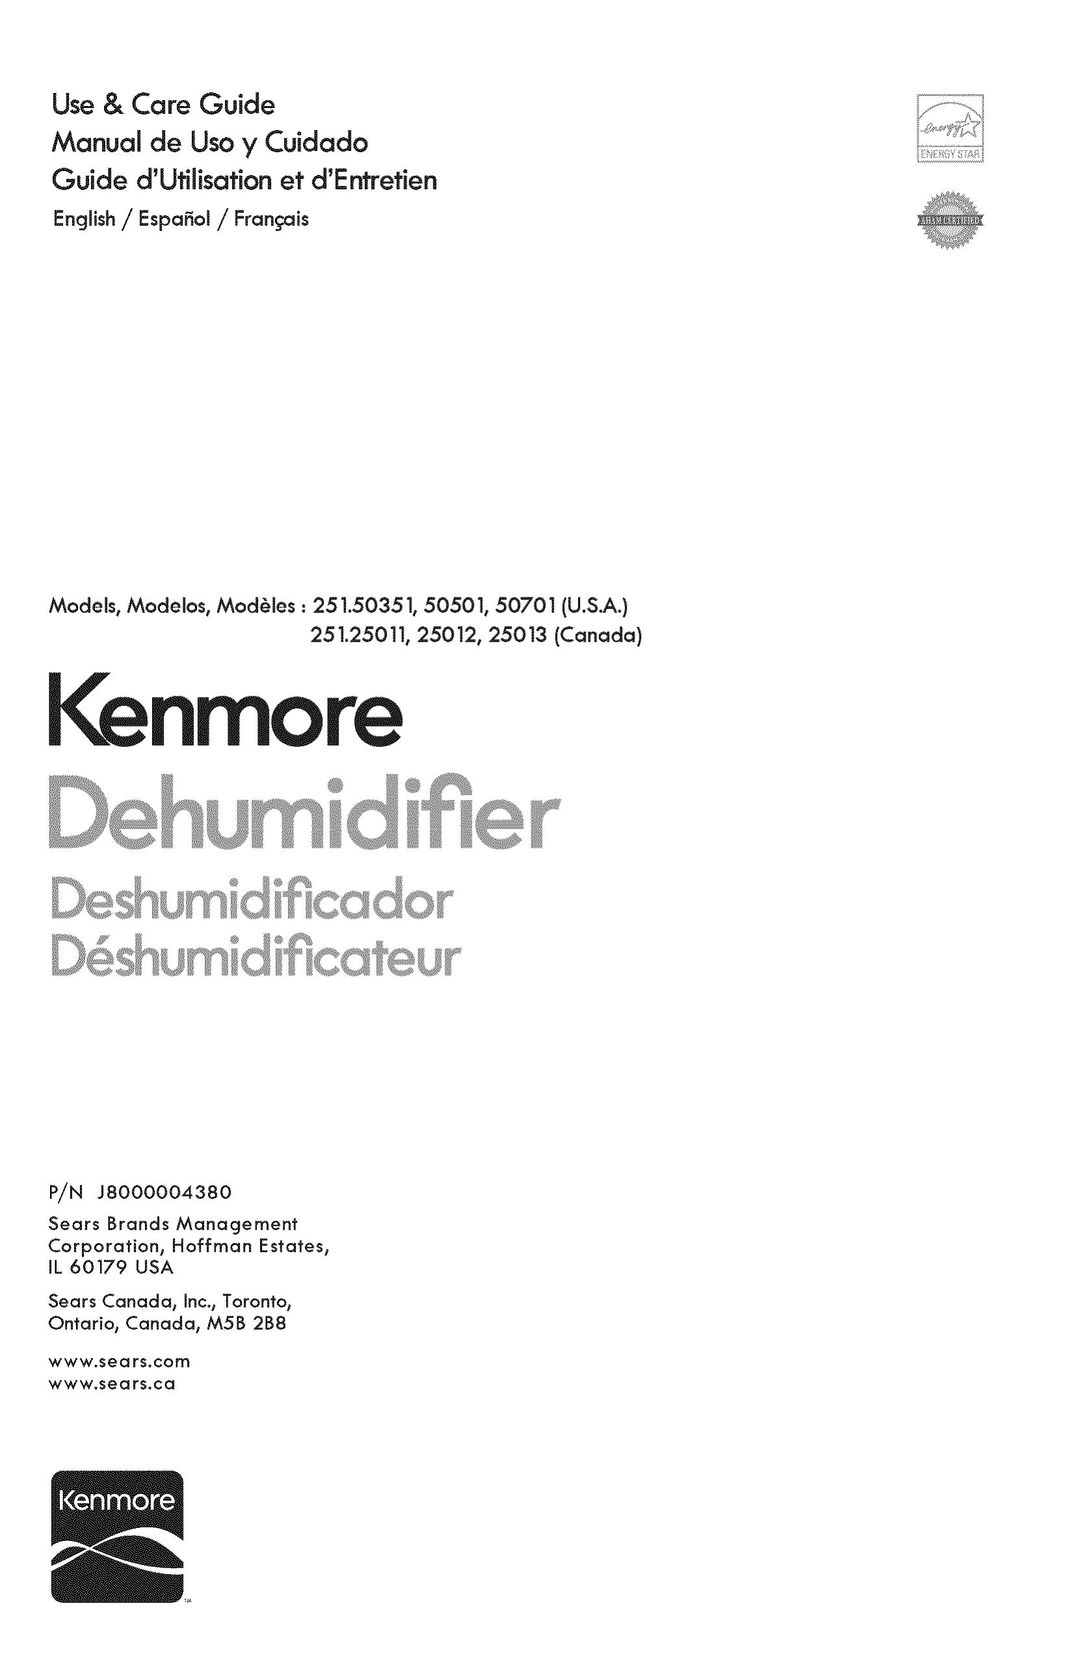 Kenmore 251.50501 Dehumidifier User Manual